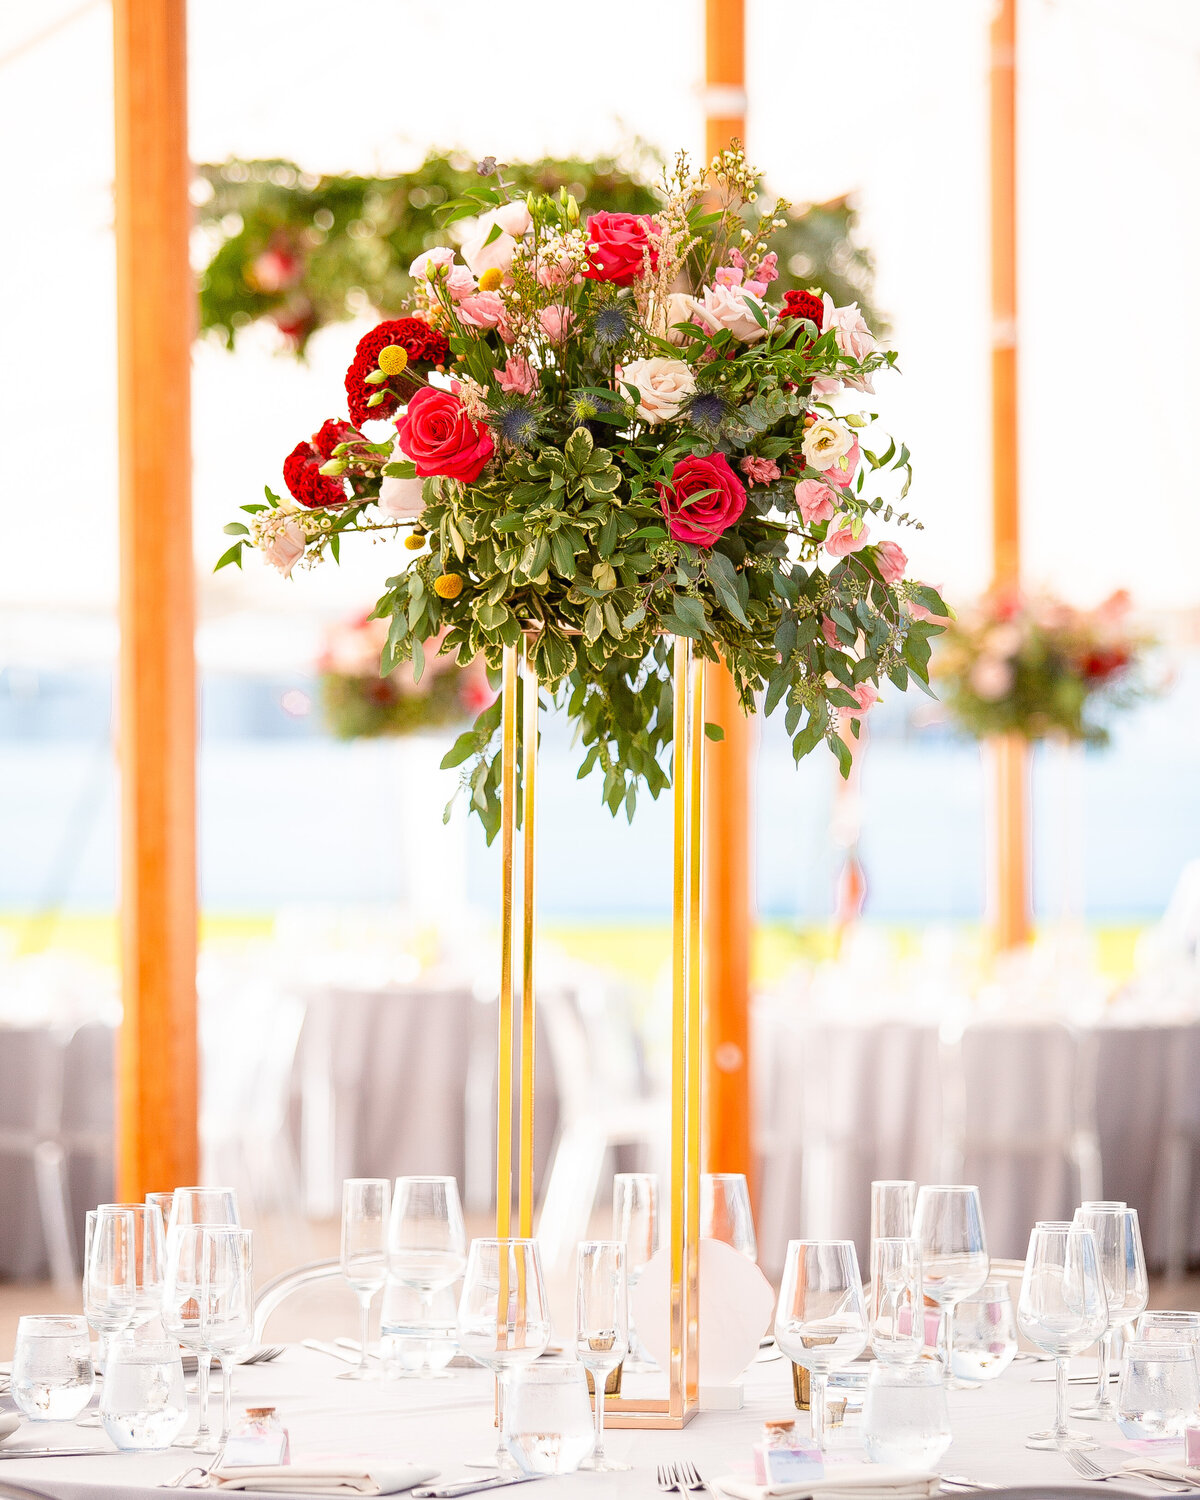 Tall flower centerpiece during tented wedding reception.